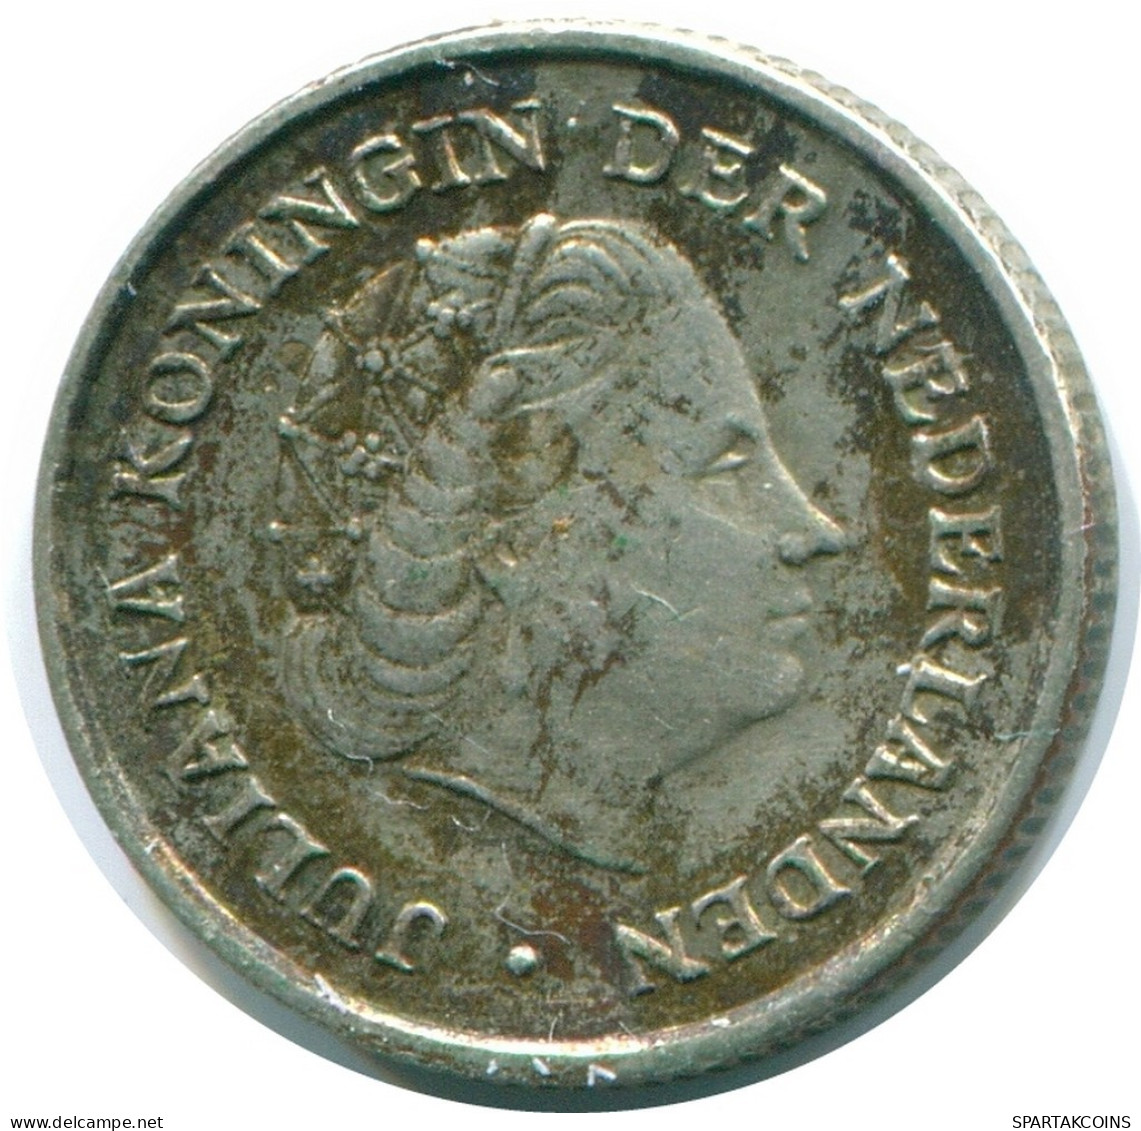 1/10 GULDEN 1960 NETHERLANDS ANTILLES SILVER Colonial Coin #NL12338.3.U.A - Antilles Néerlandaises